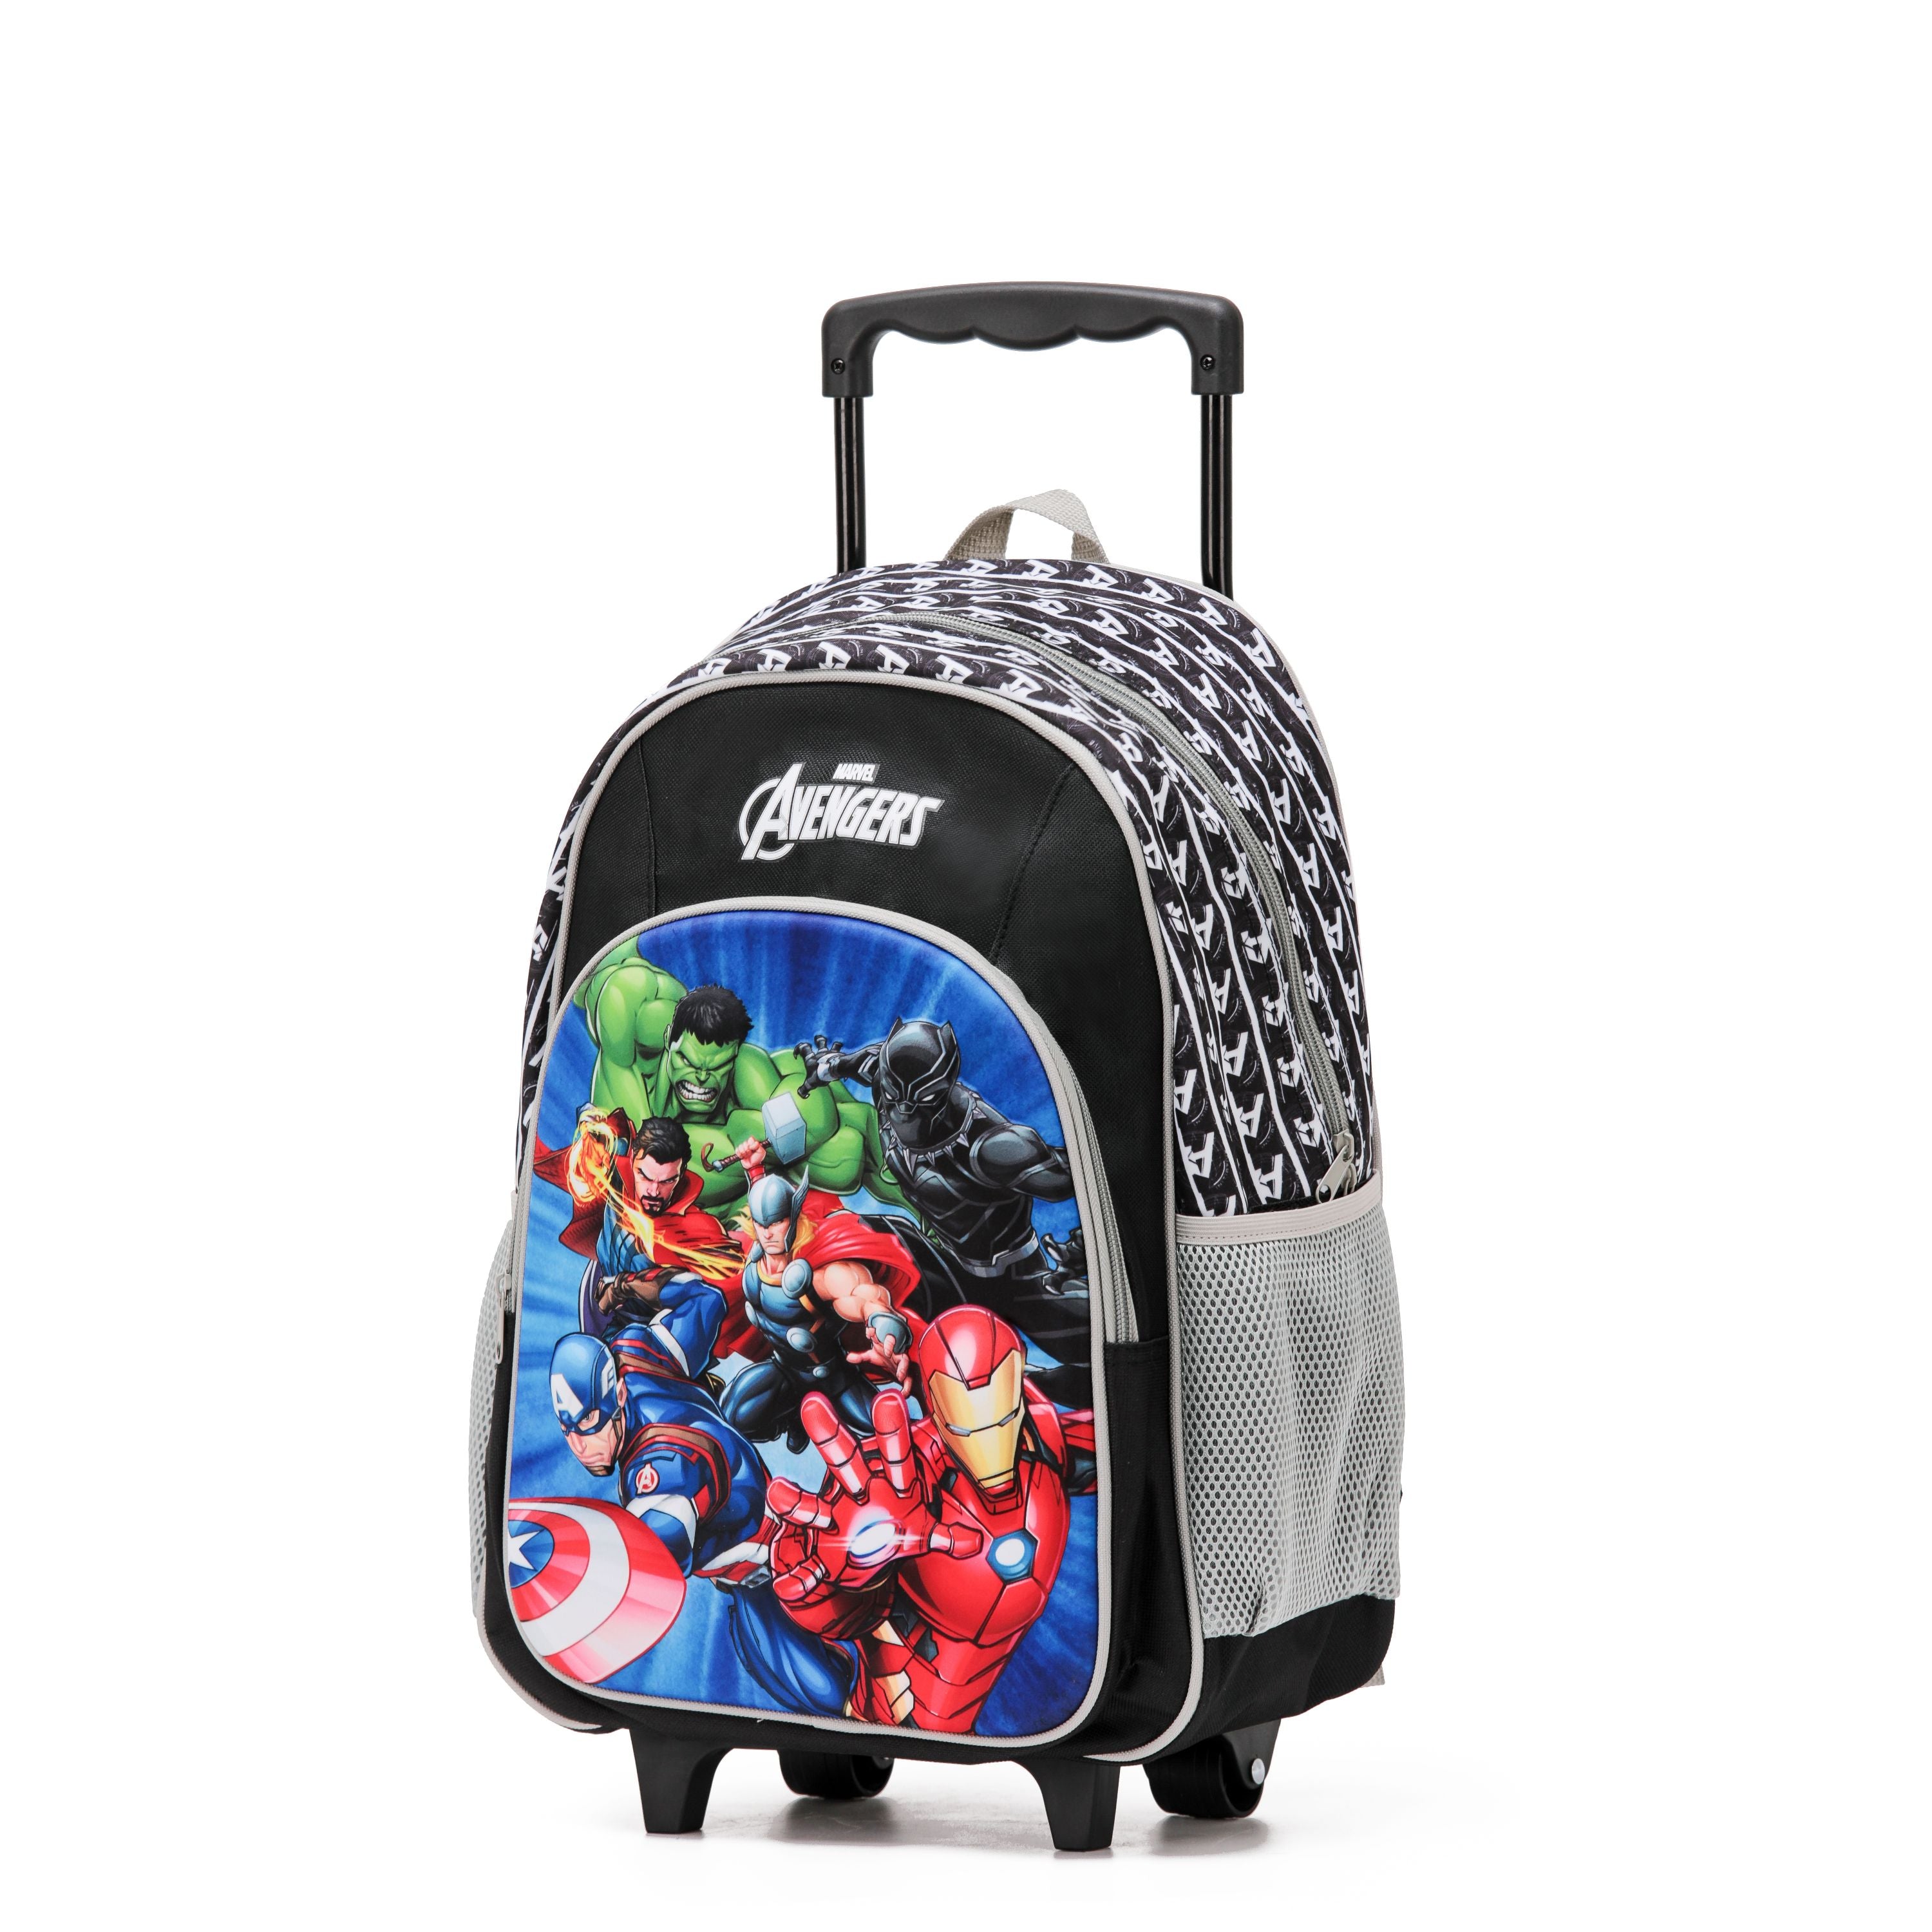 Marvel - Mar091 17in Avengers backpack trolley bag - Black-1